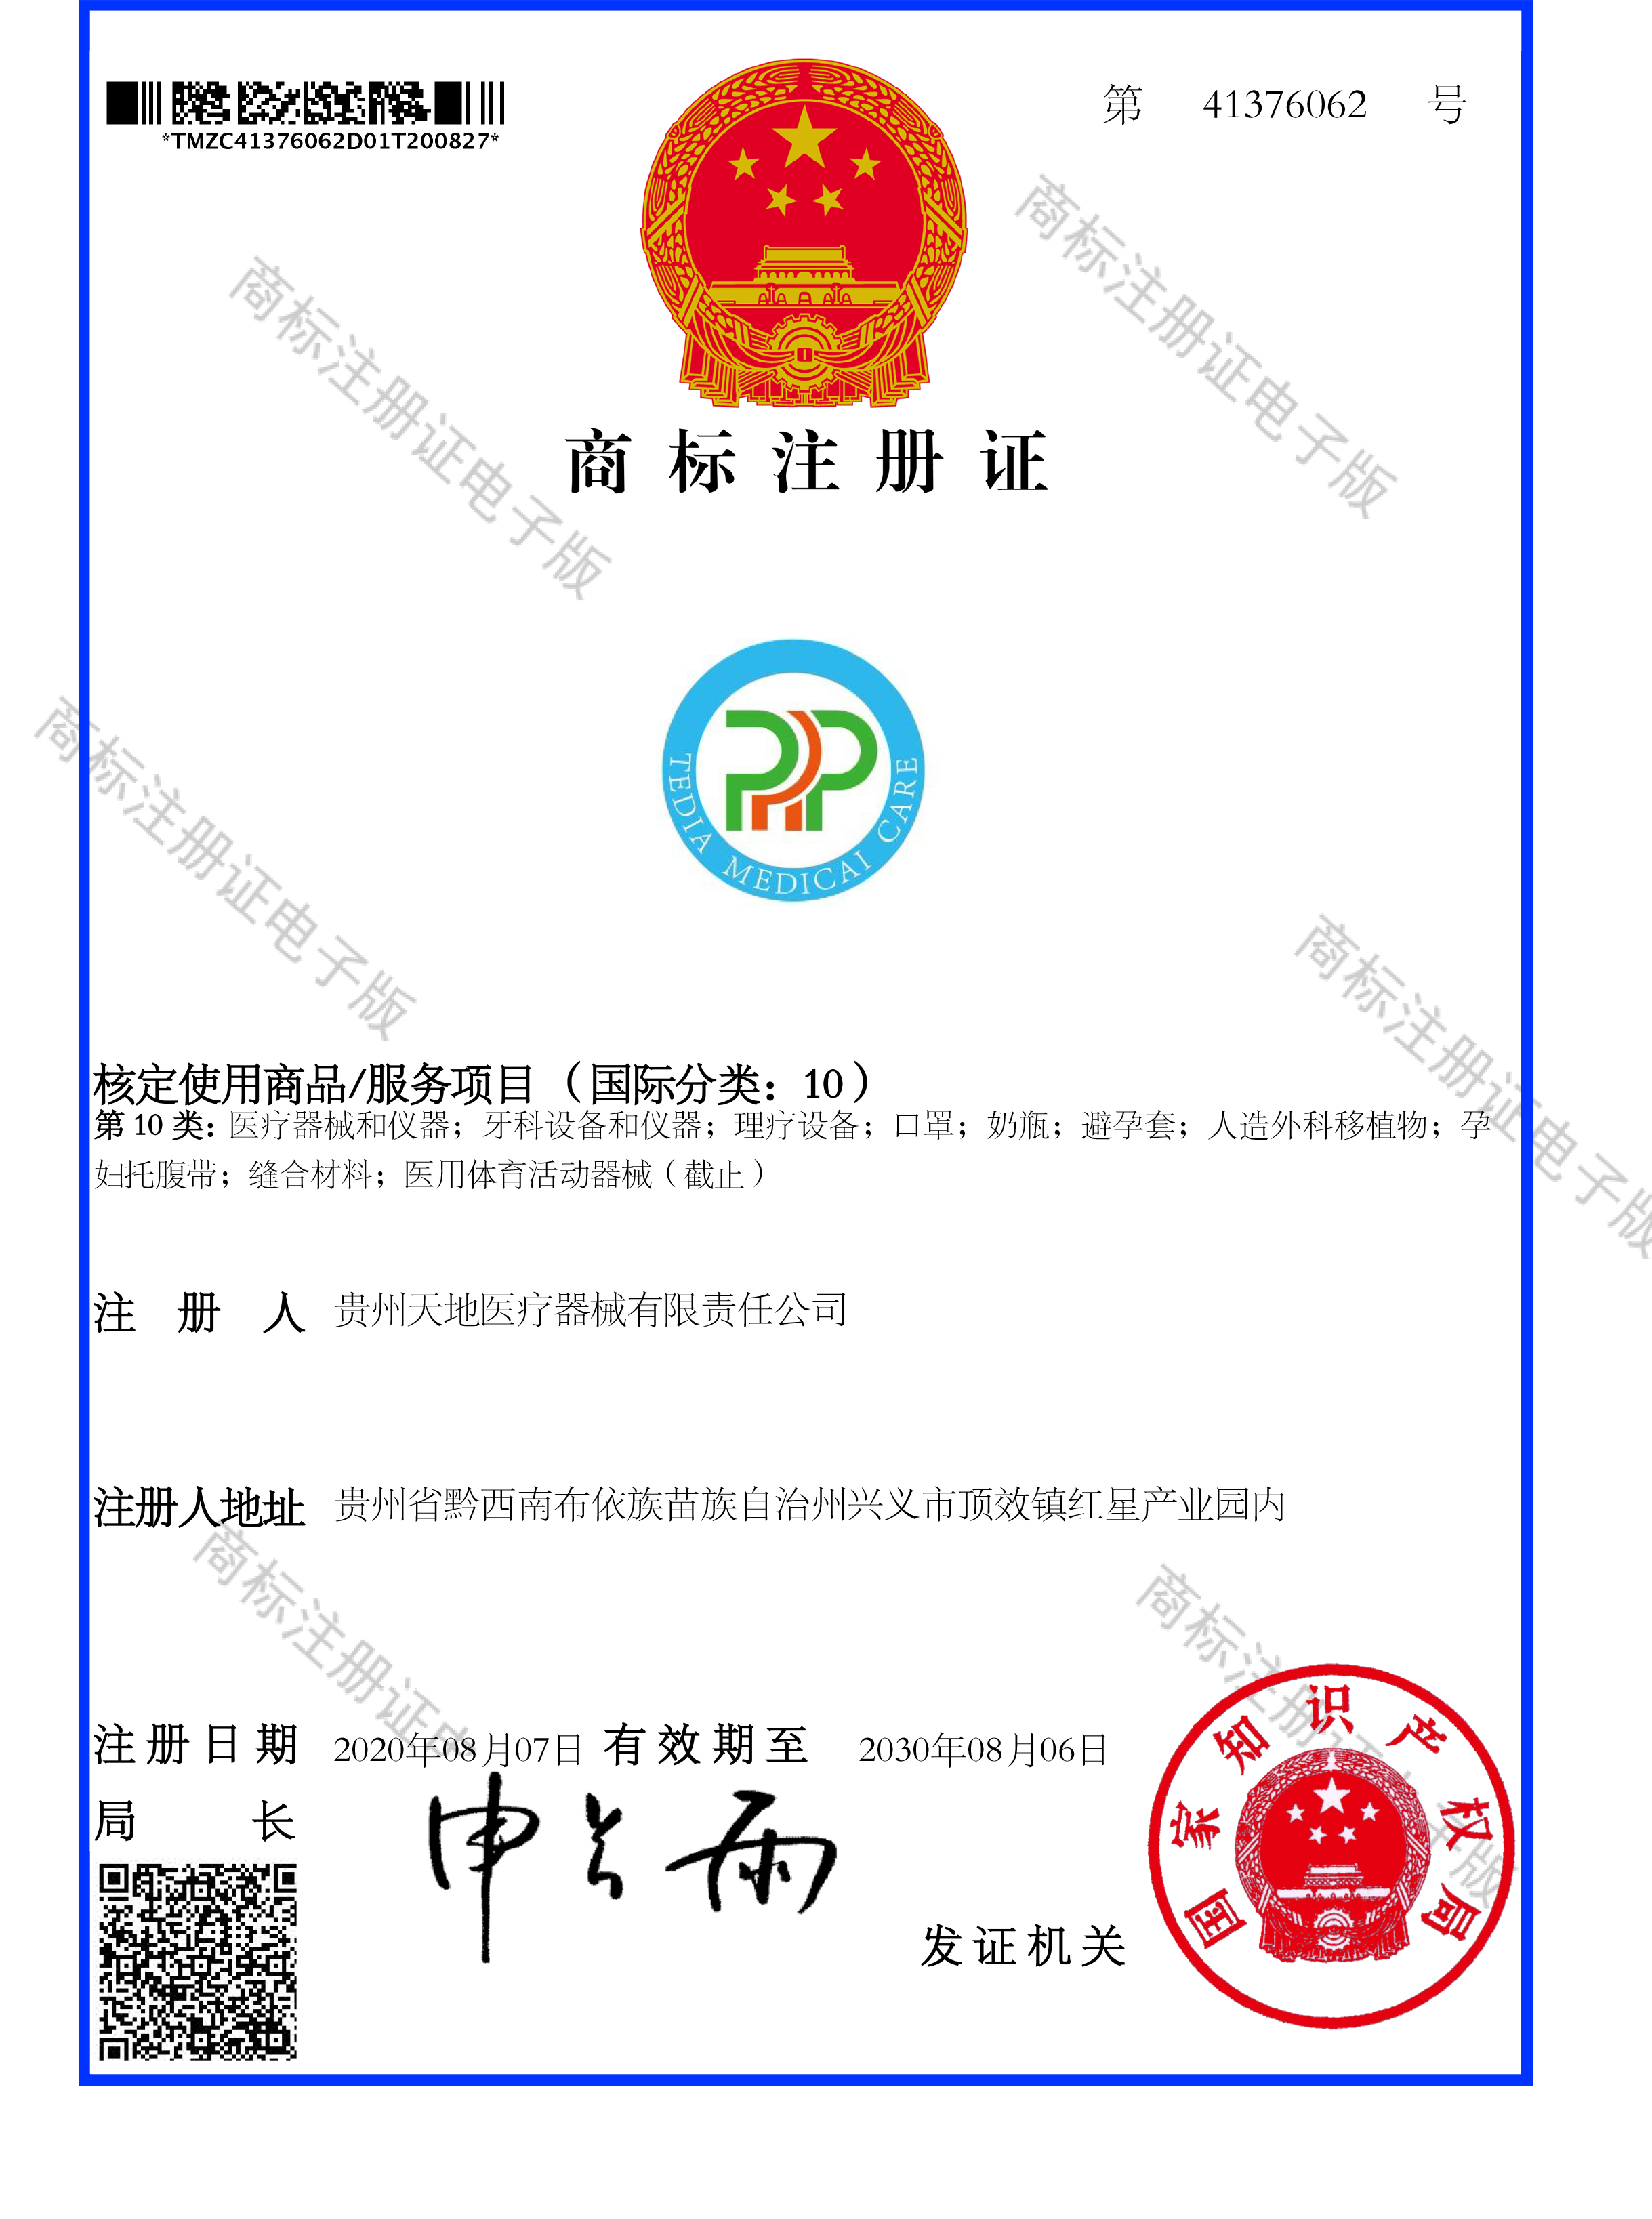 PRP商标注册证